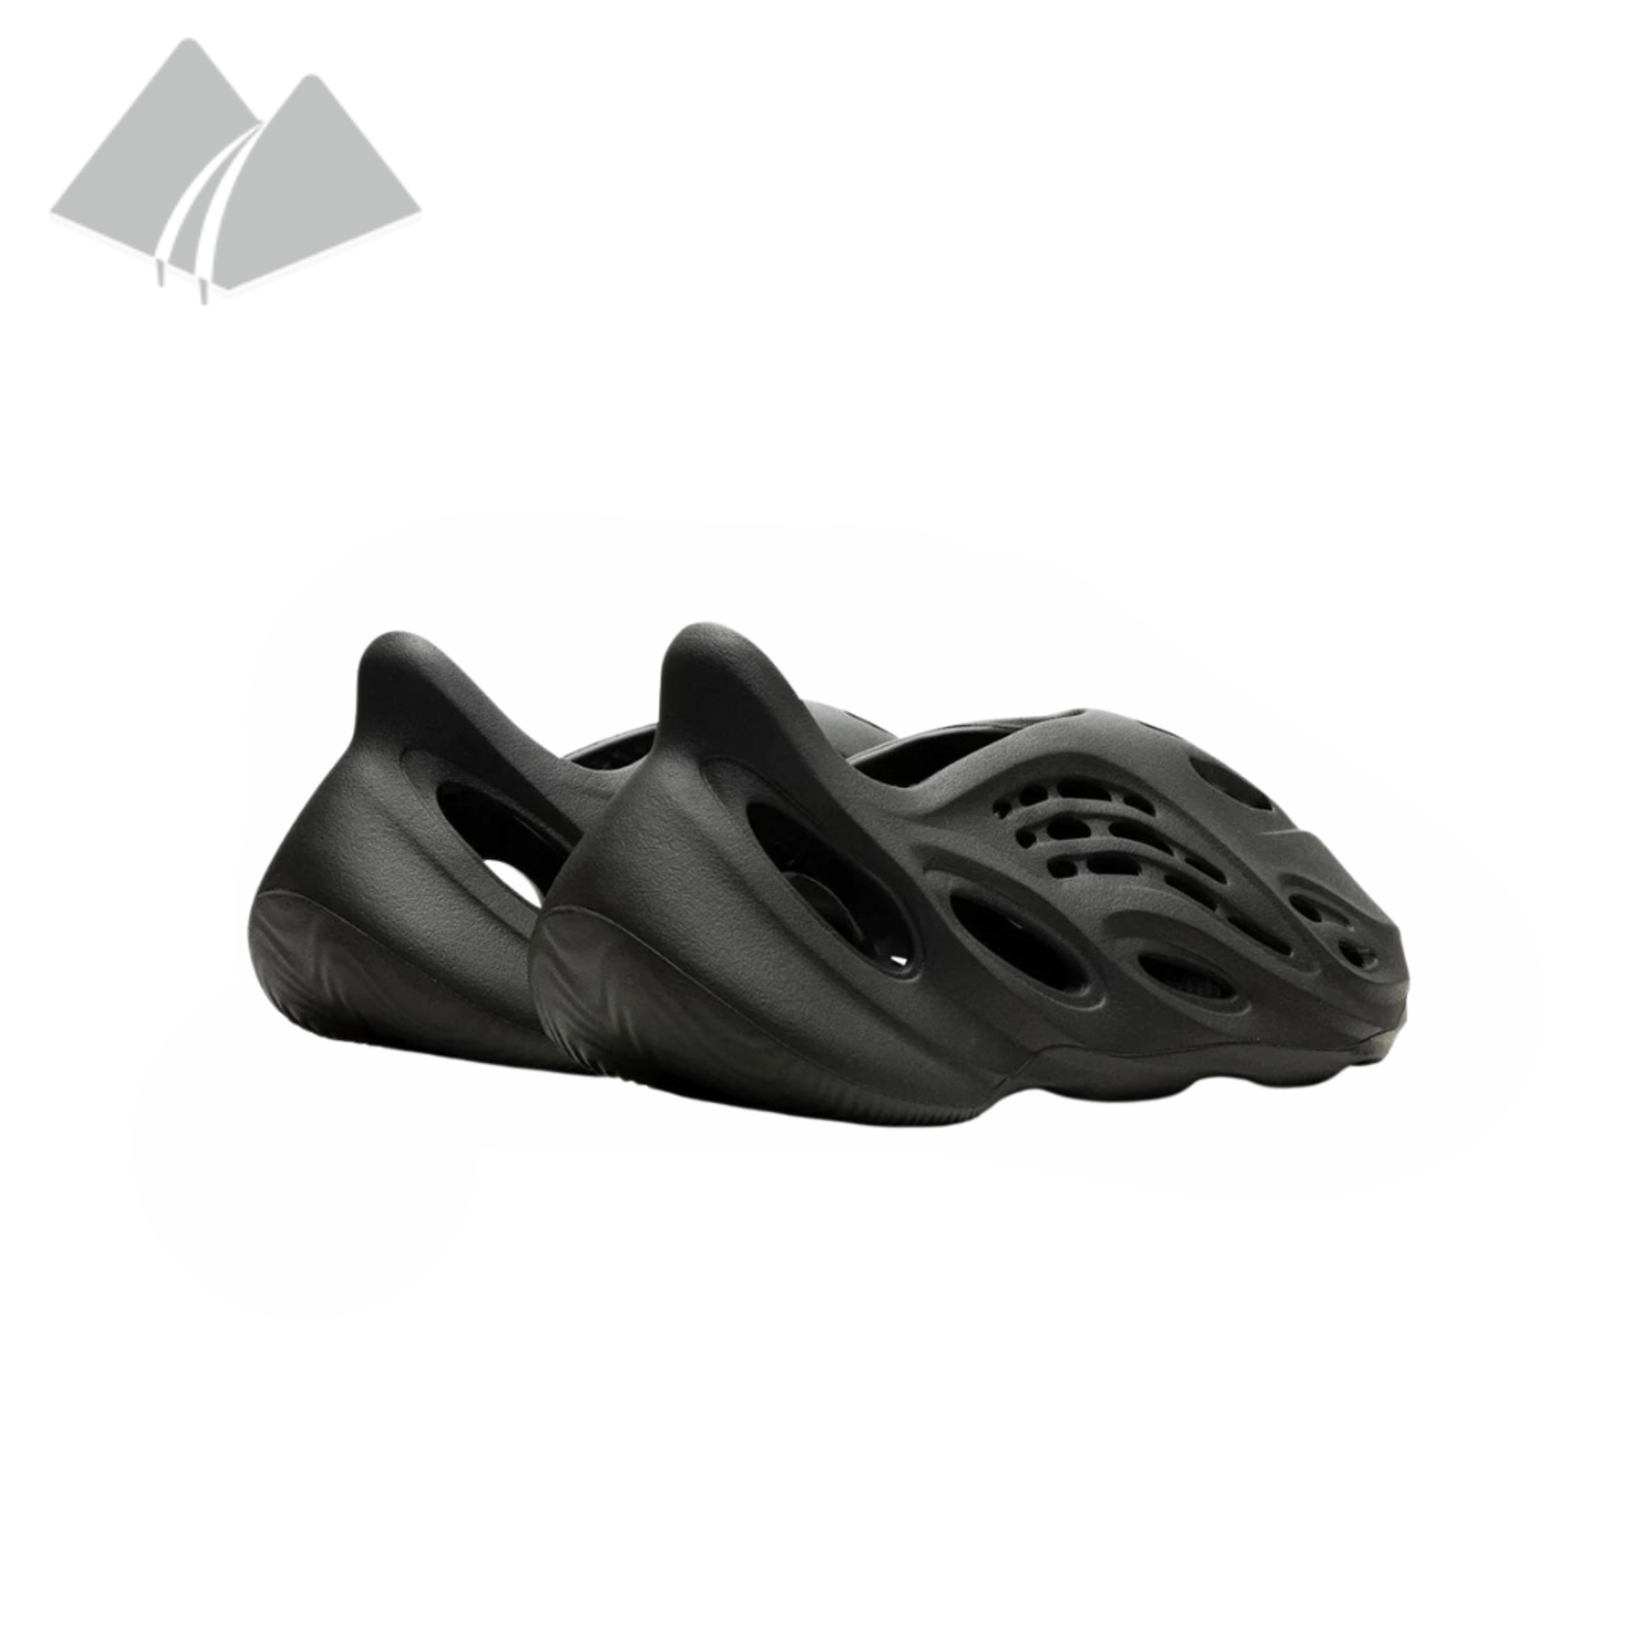 Adidas Adidas Yeezy Foam Runner (M) Carbon